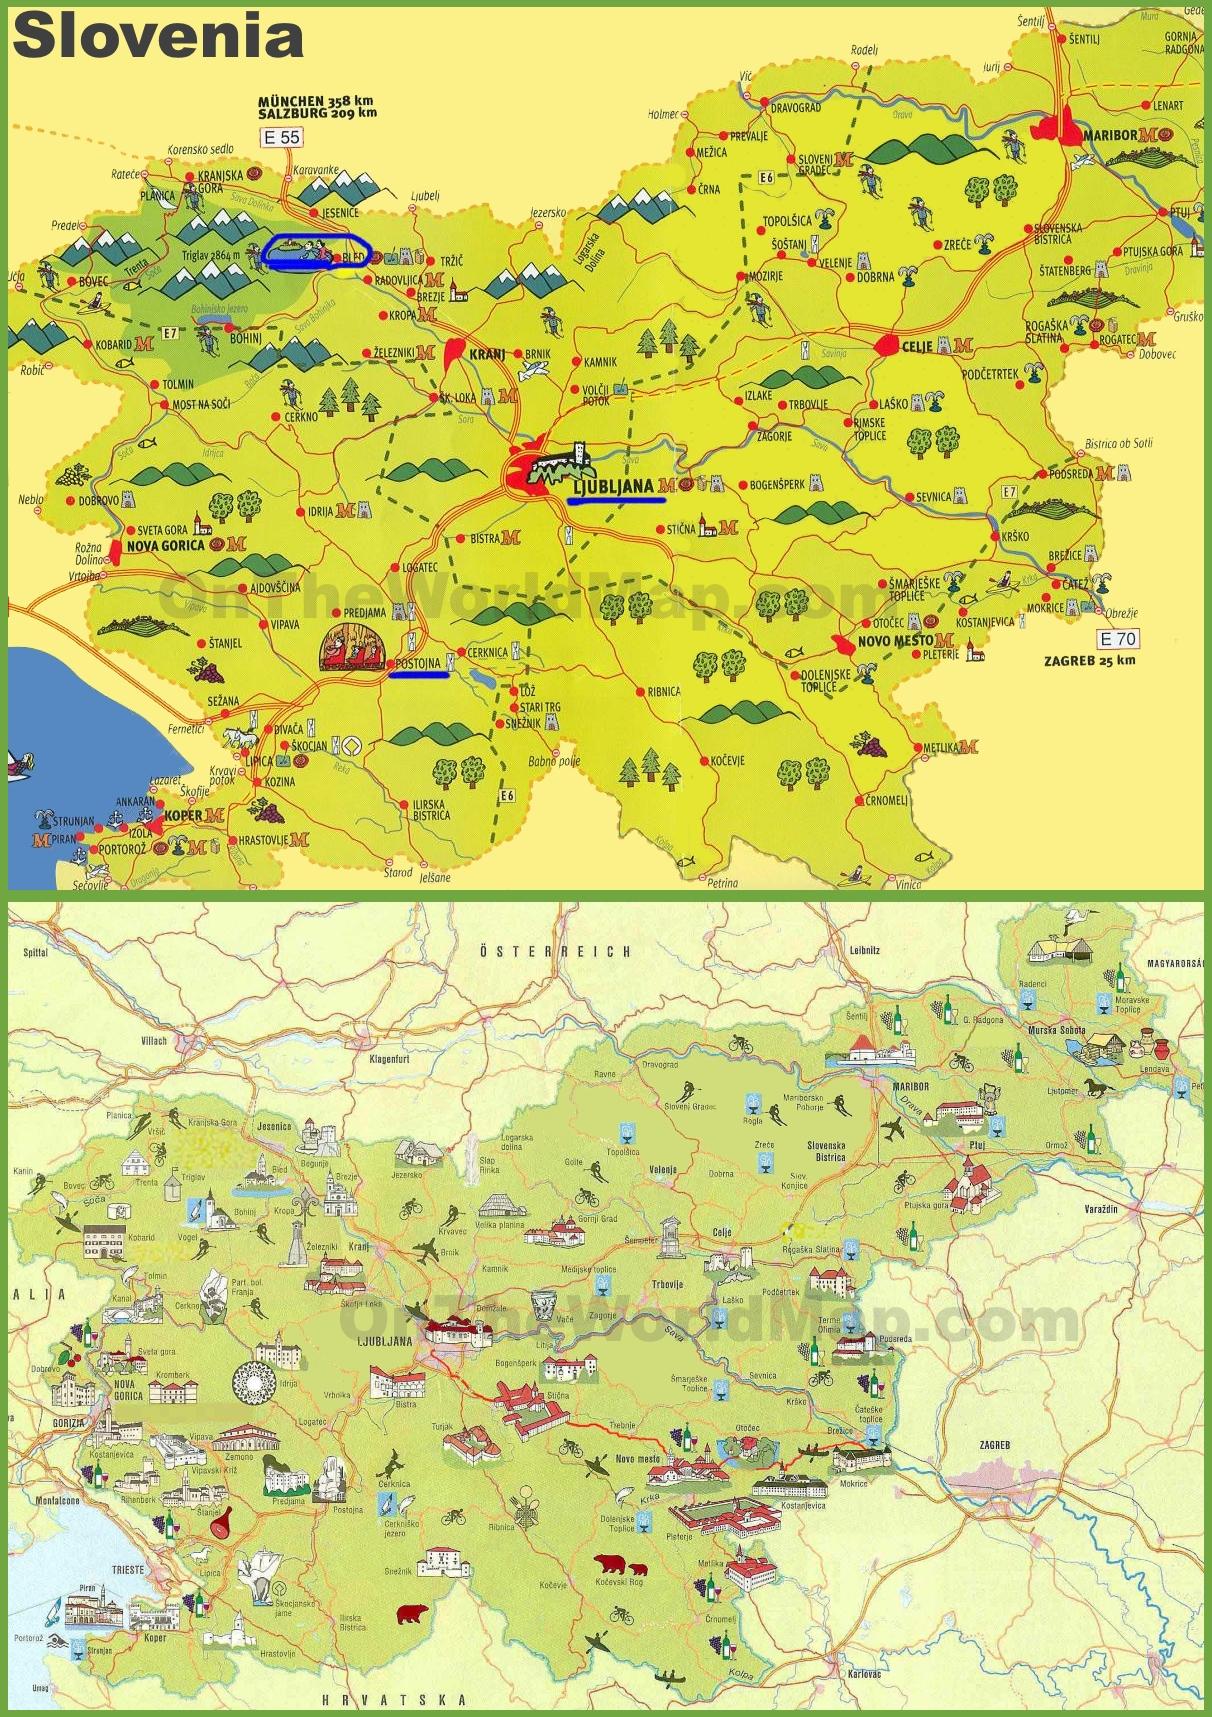 Slovenien turist karta - Slovenien resa karta (Södra Europa - Europa)